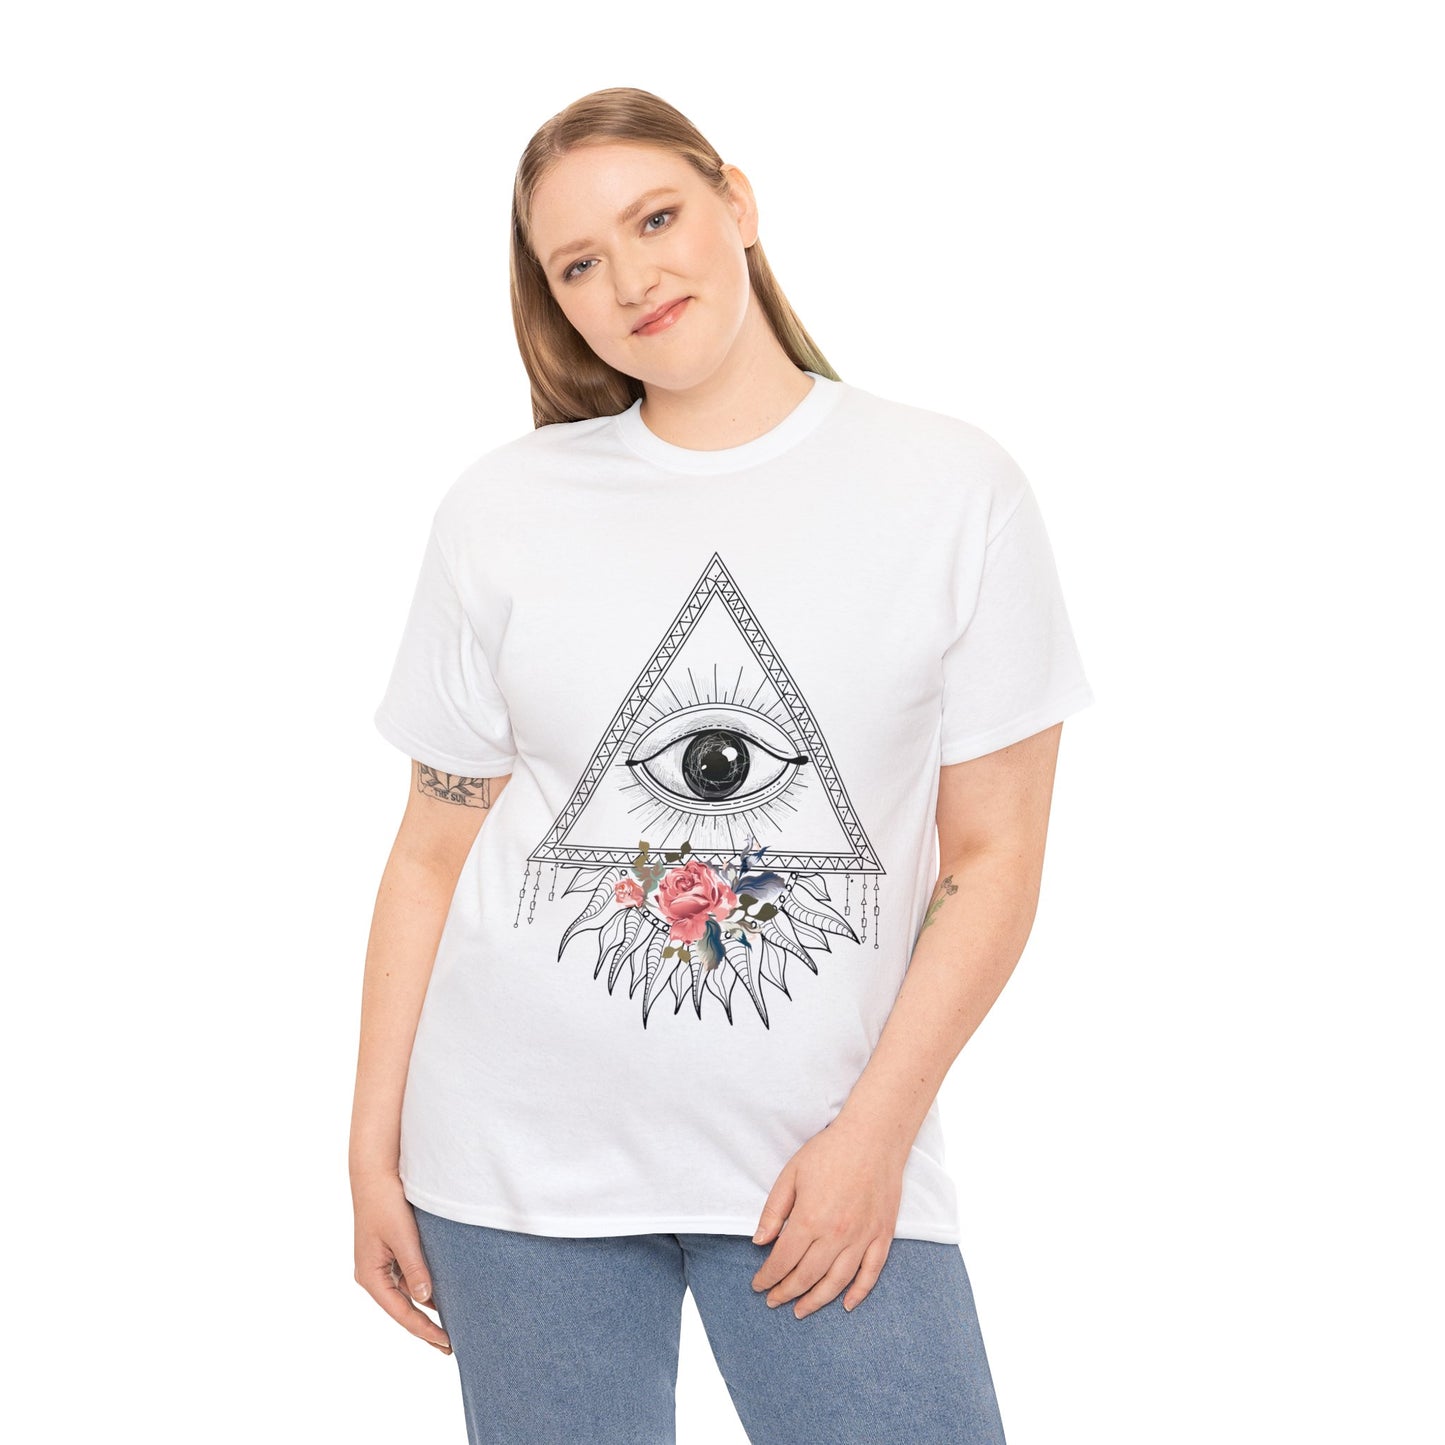 Illuminati Eye Triangle Flower Design Popular Culture Graphic Tee